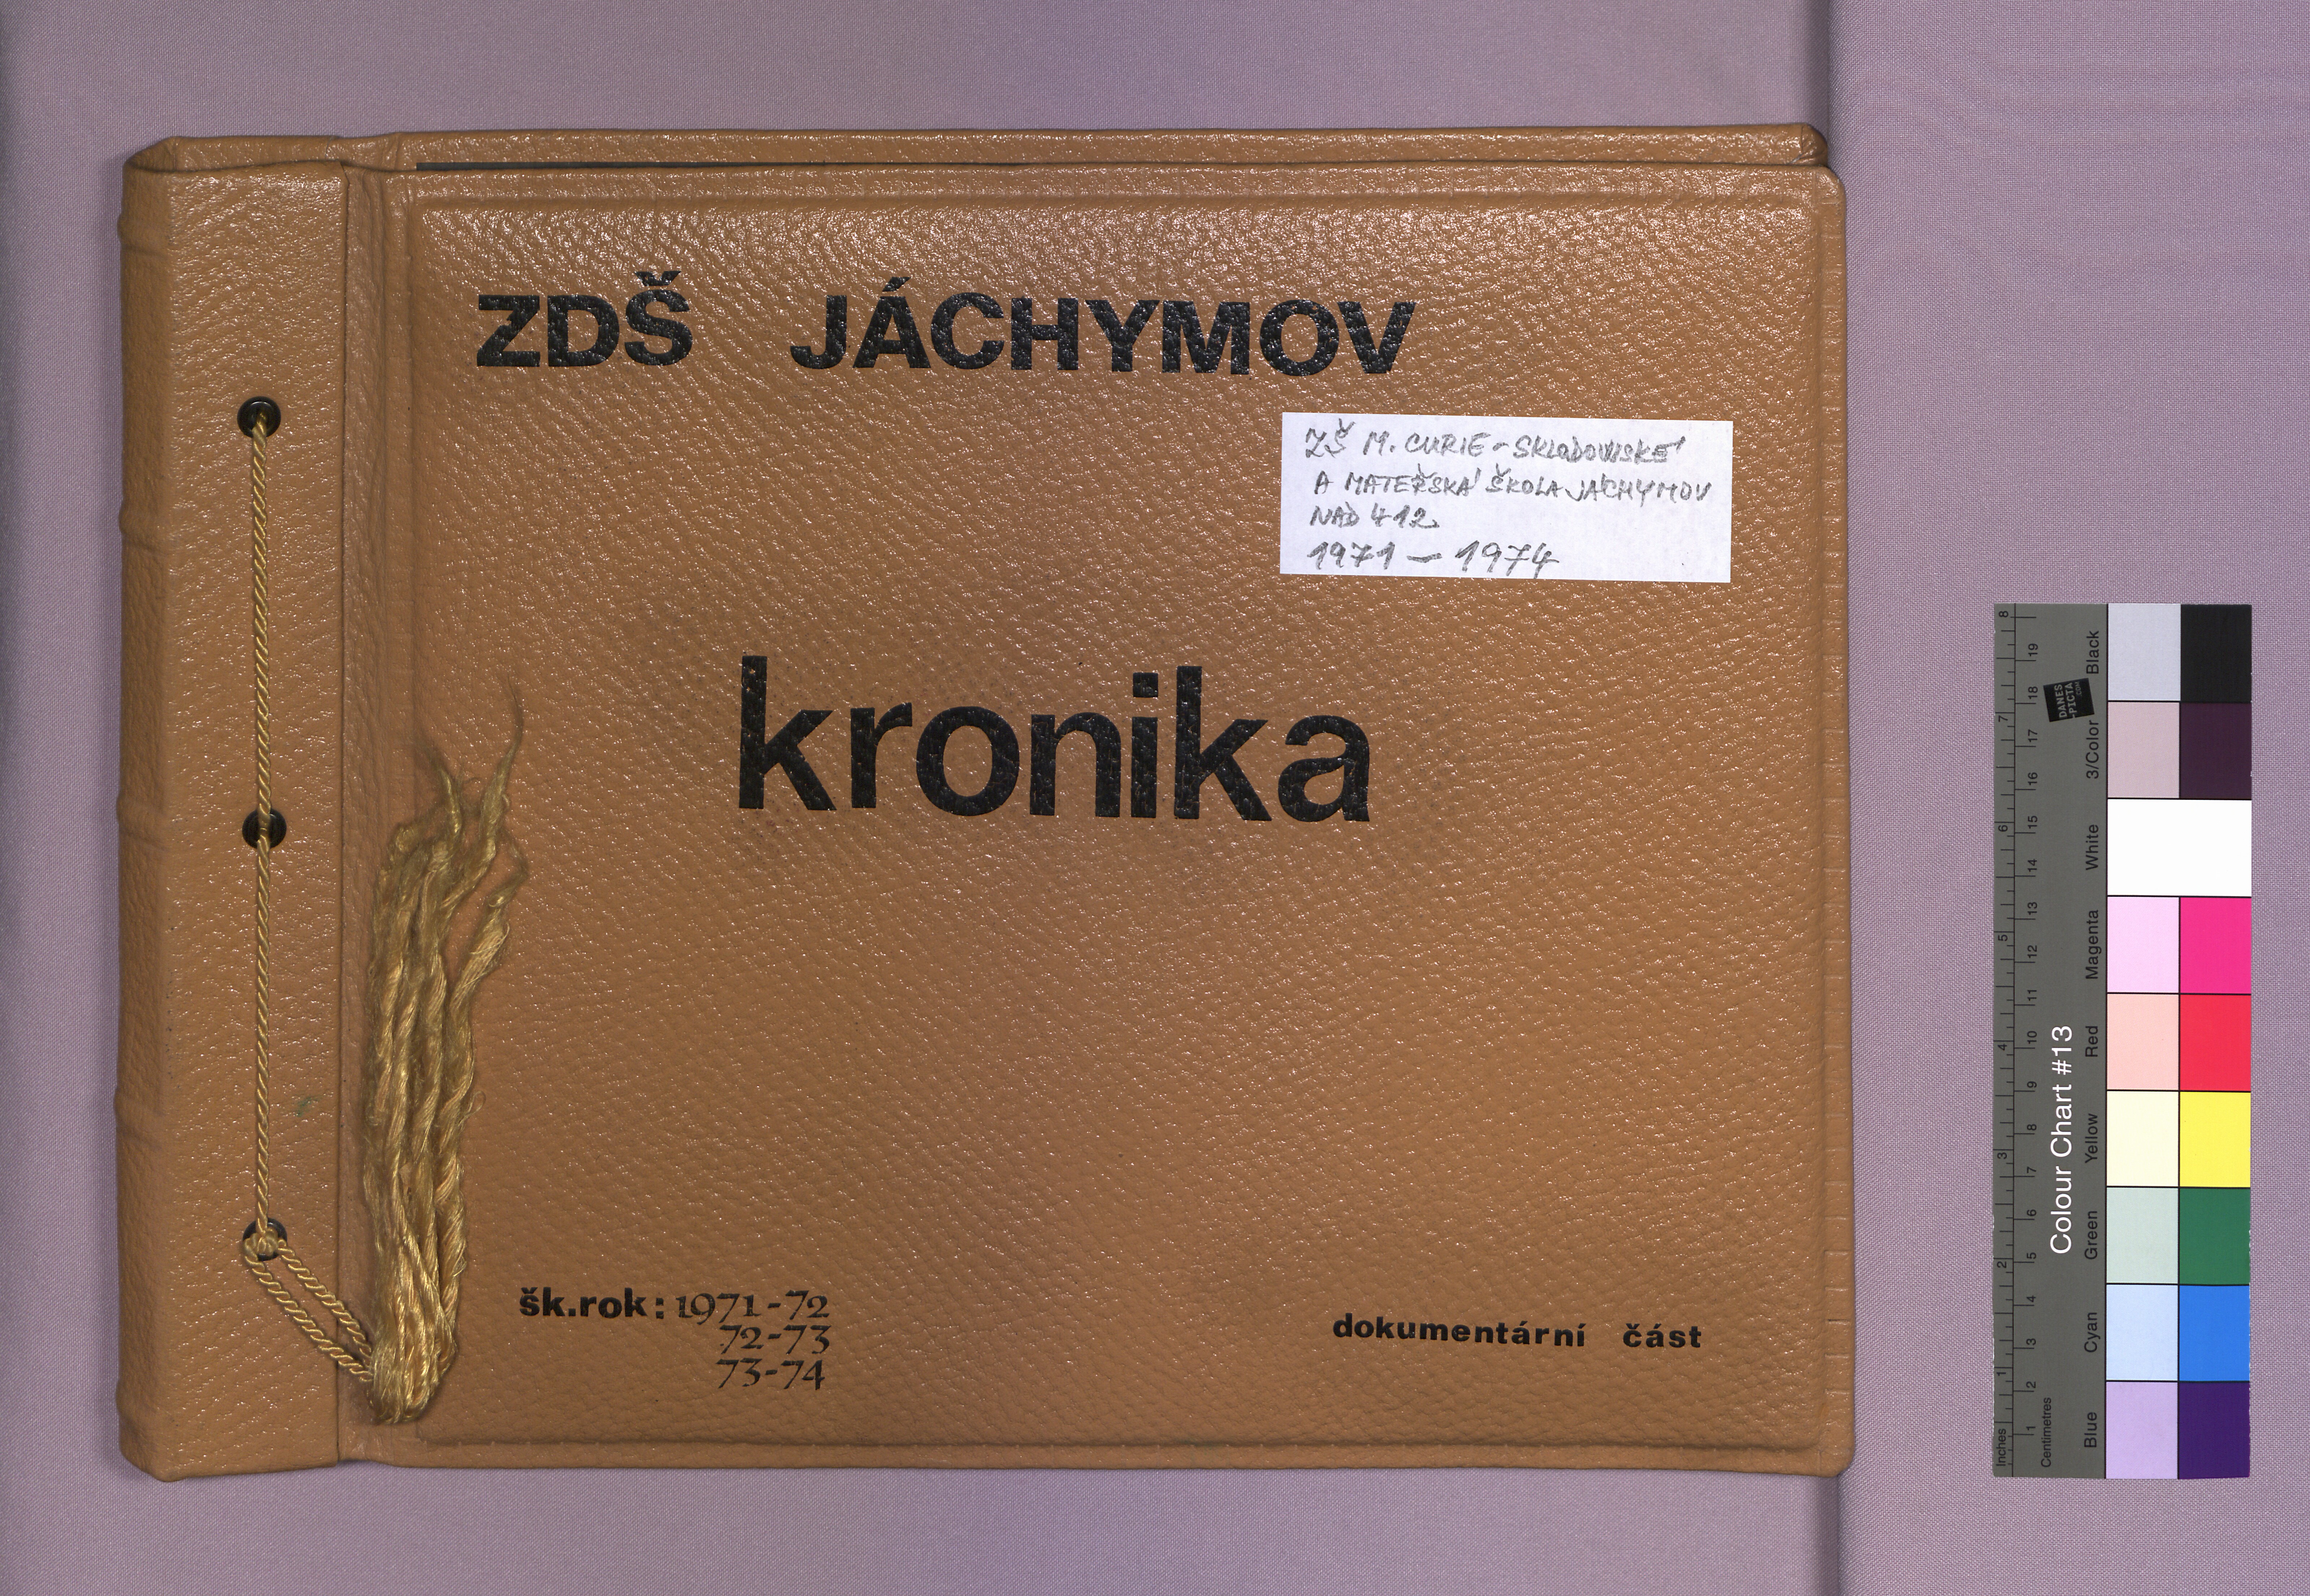 1. soap-kv_00412_skola-jachymov-fotoalbum-1971-1974_0010